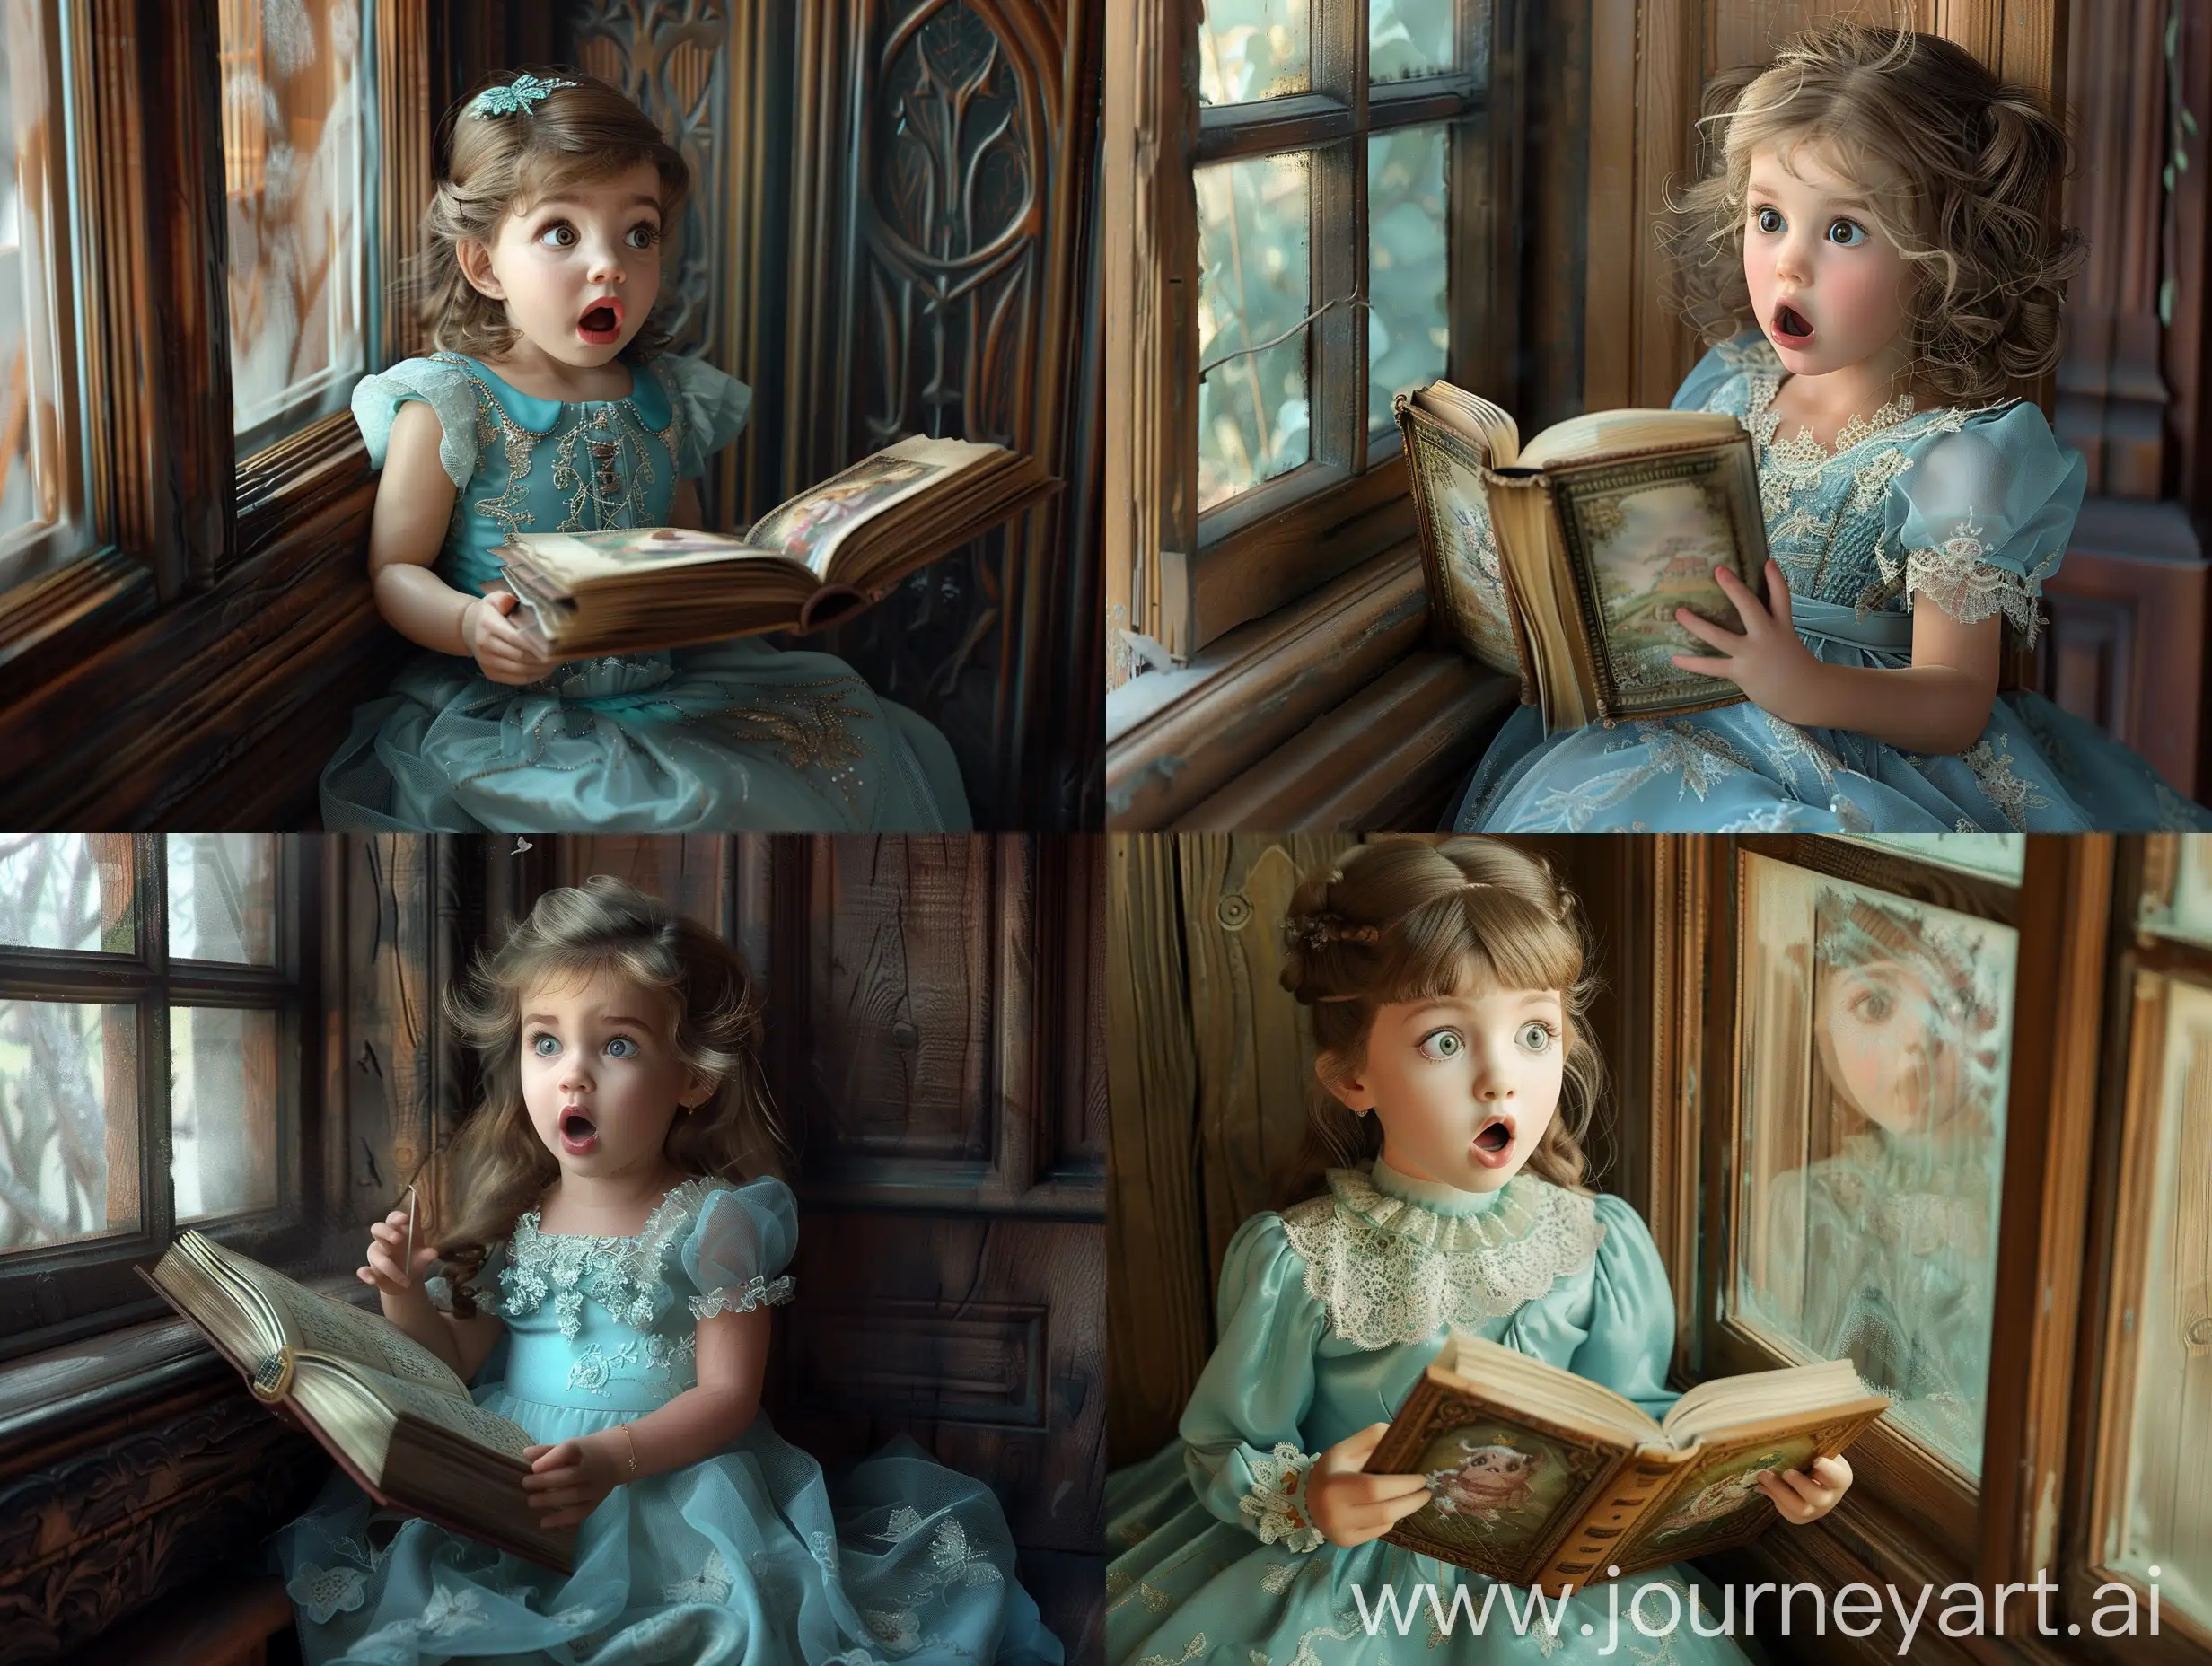 Enchanted-Child-in-Vintage-Dress-Reading-Beside-Wooden-Window